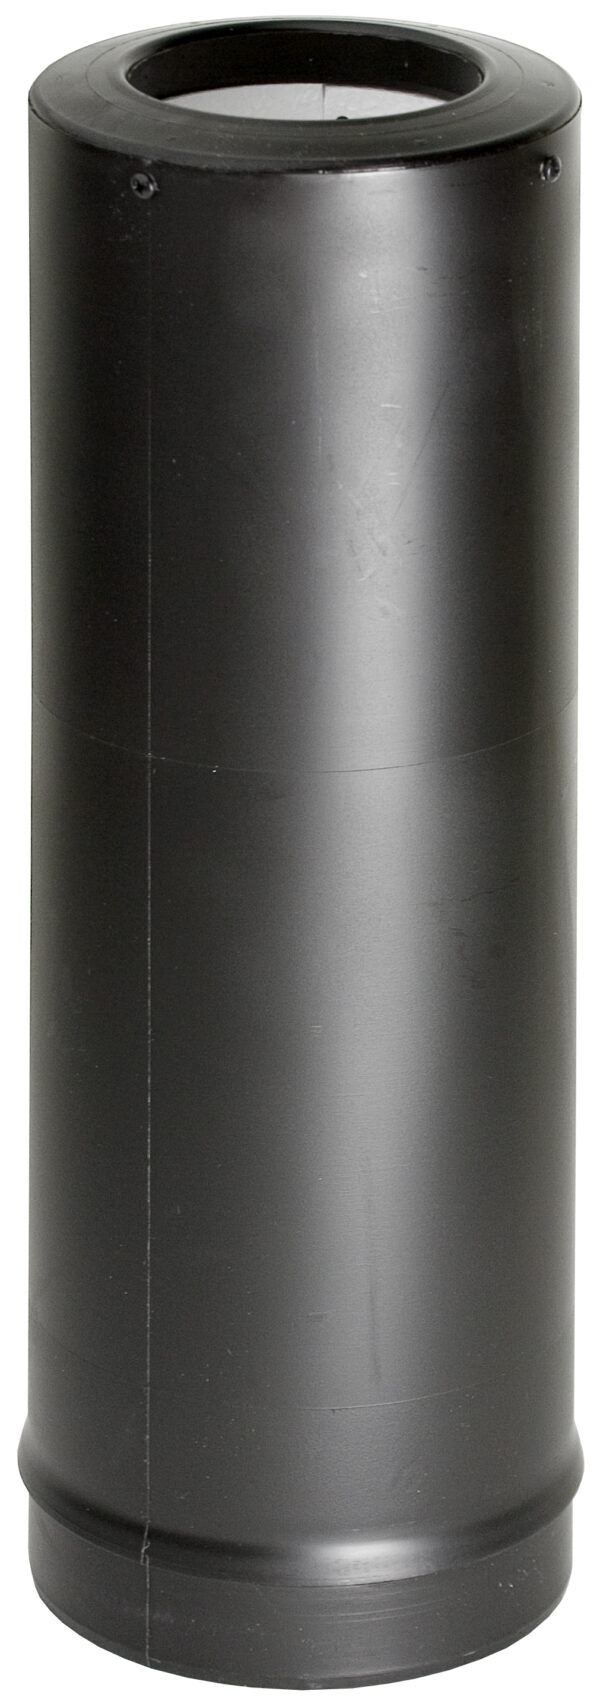 Изолирующий кожух -110 Vilpe для теплоизоляции вентиляционного выхода Ø 110 мм 1